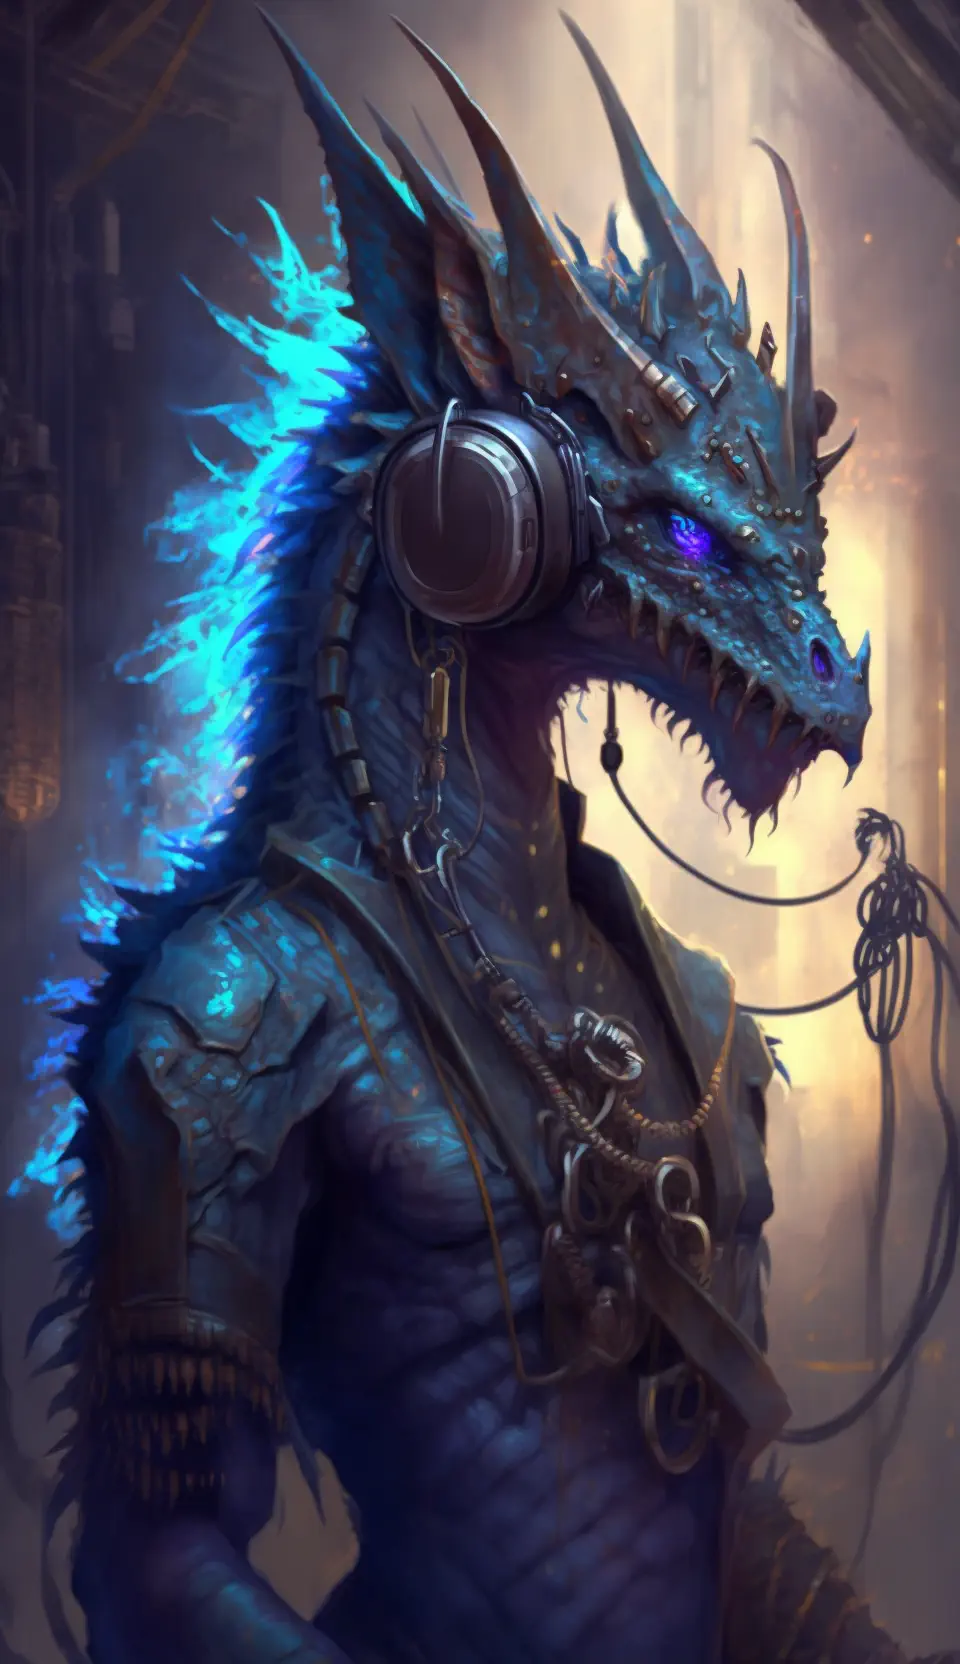 Drapet_mystical_dragon_with_headphones_listening_to_music_diffu_8b8e127b-af79-43d8-aa39-86b5a084f9fa (1)